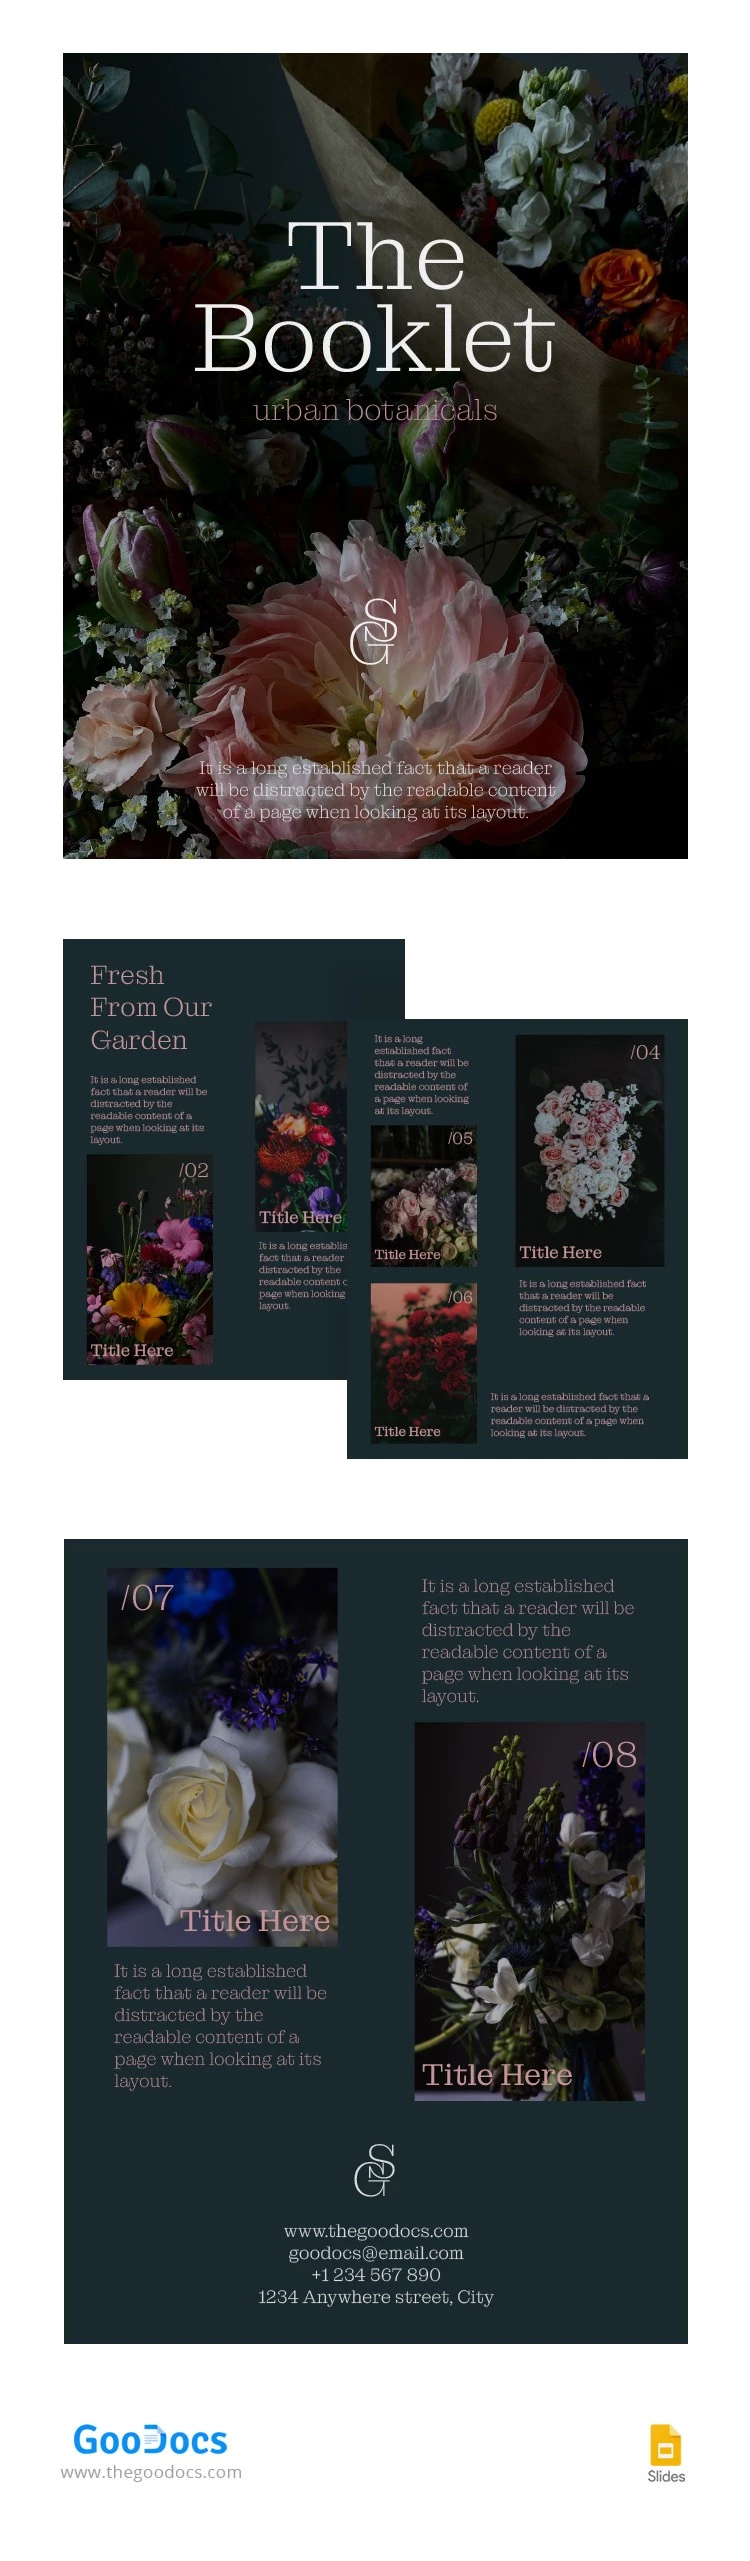 Opuscolo moderno di botanica urbana - free Google Docs Template - 10064557